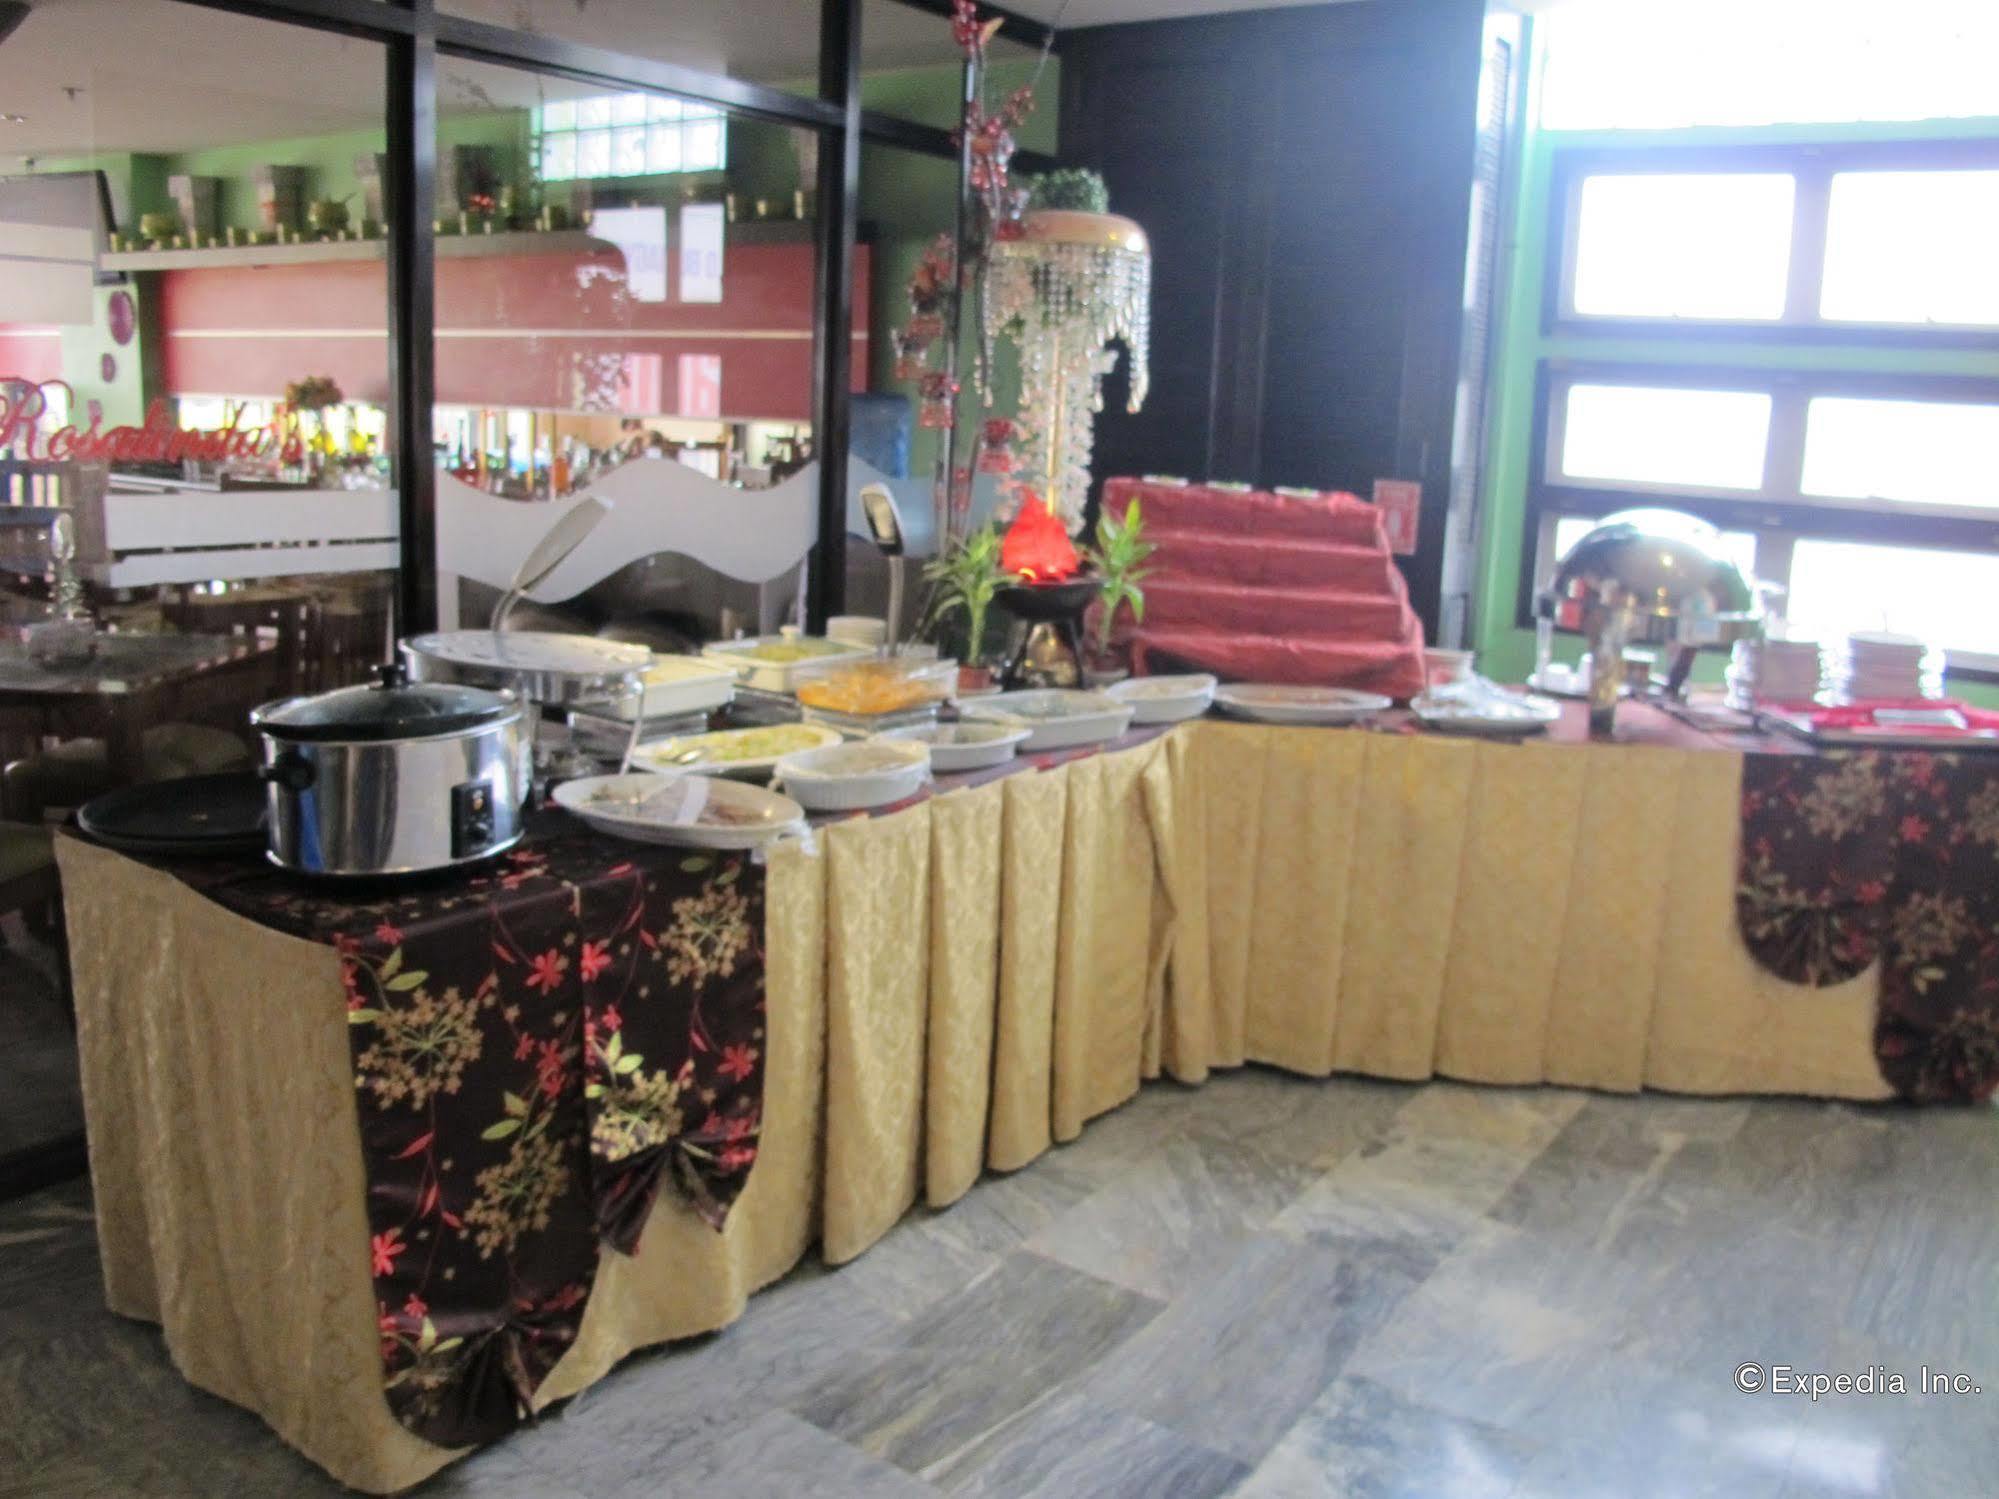 Sugbutel Family Hotel Себу Экстерьер фото